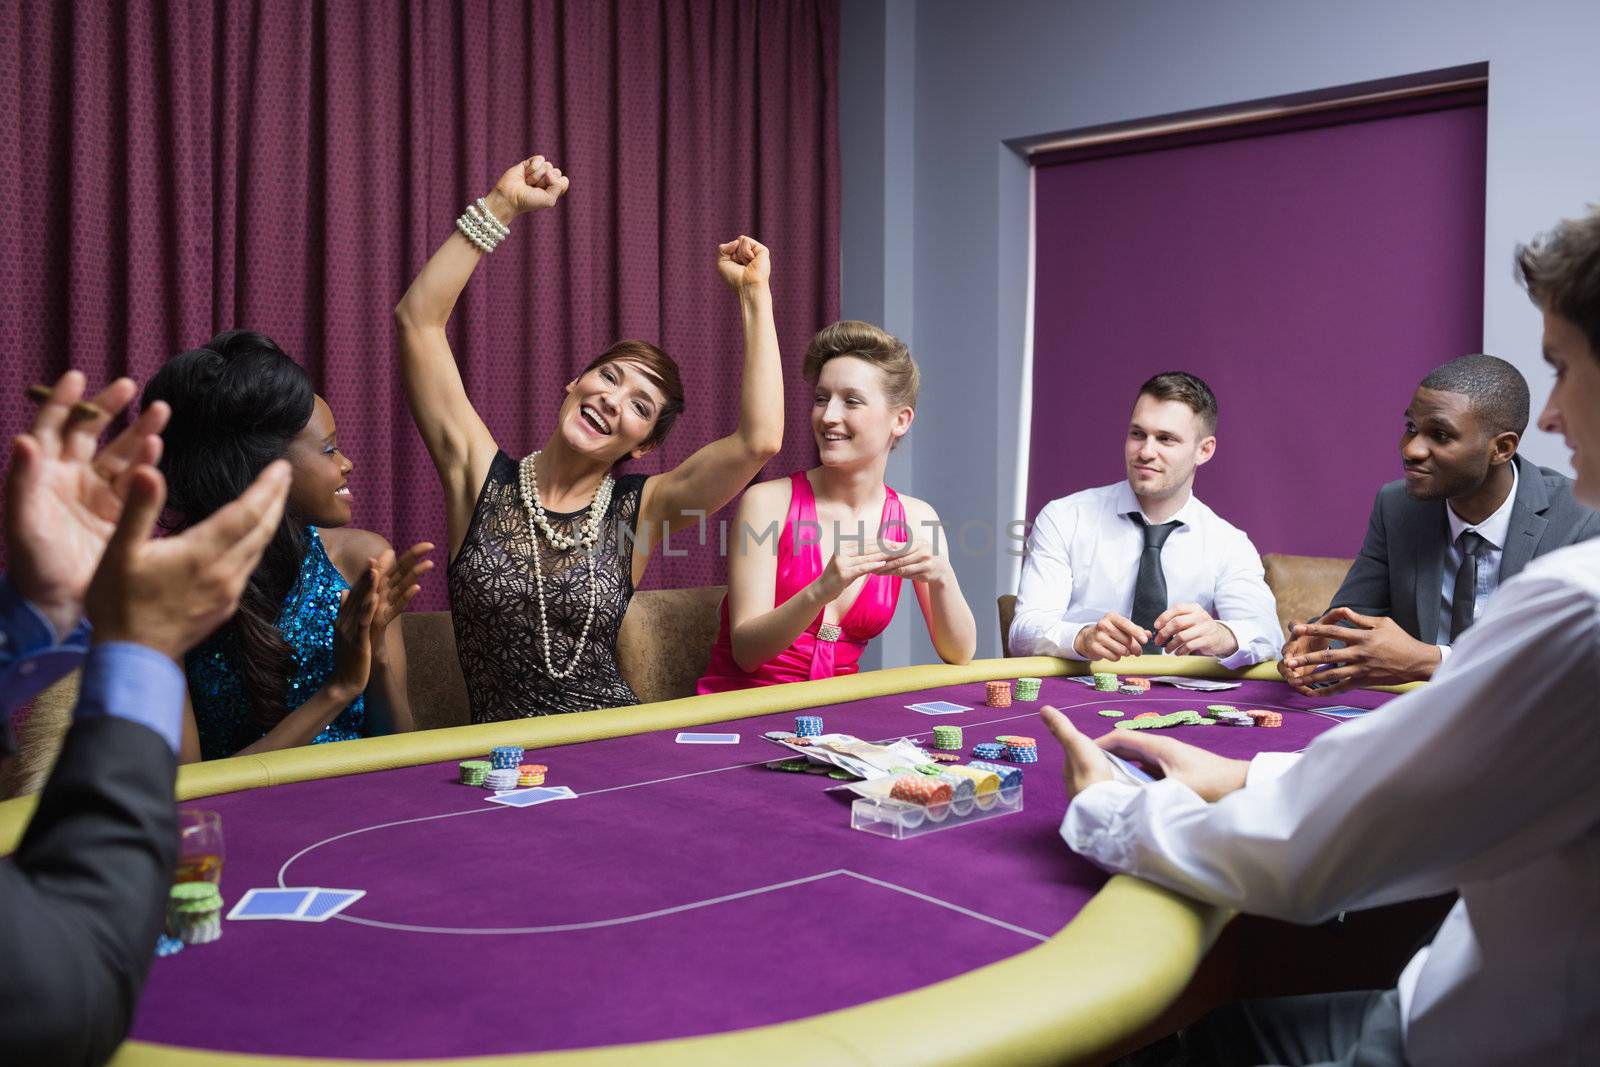 People cheering at poker table by Wavebreakmedia